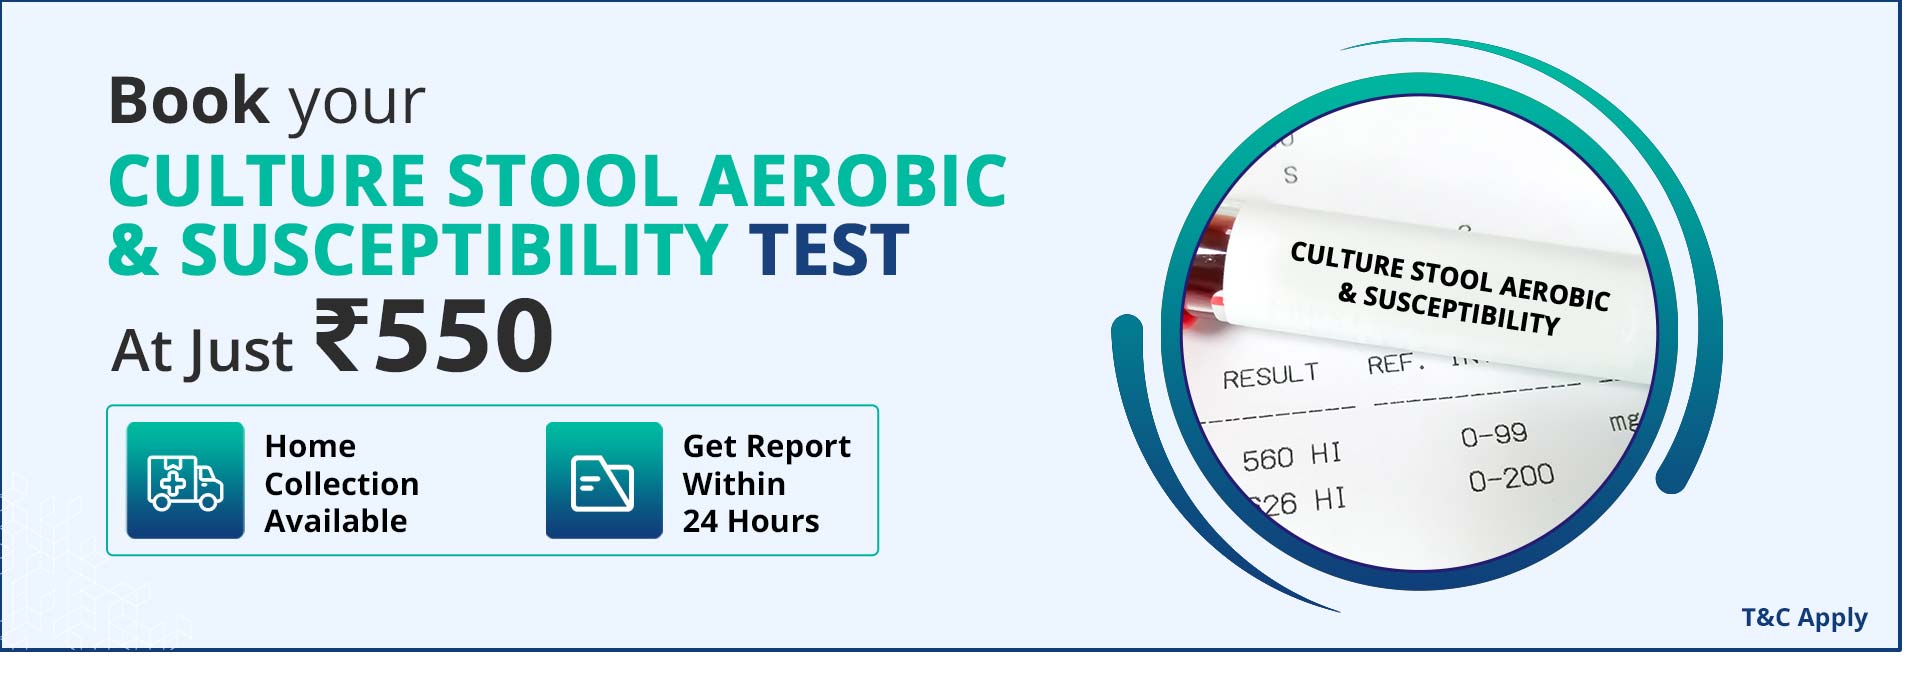 Culture Stool Aerobic & Susceptibility Test